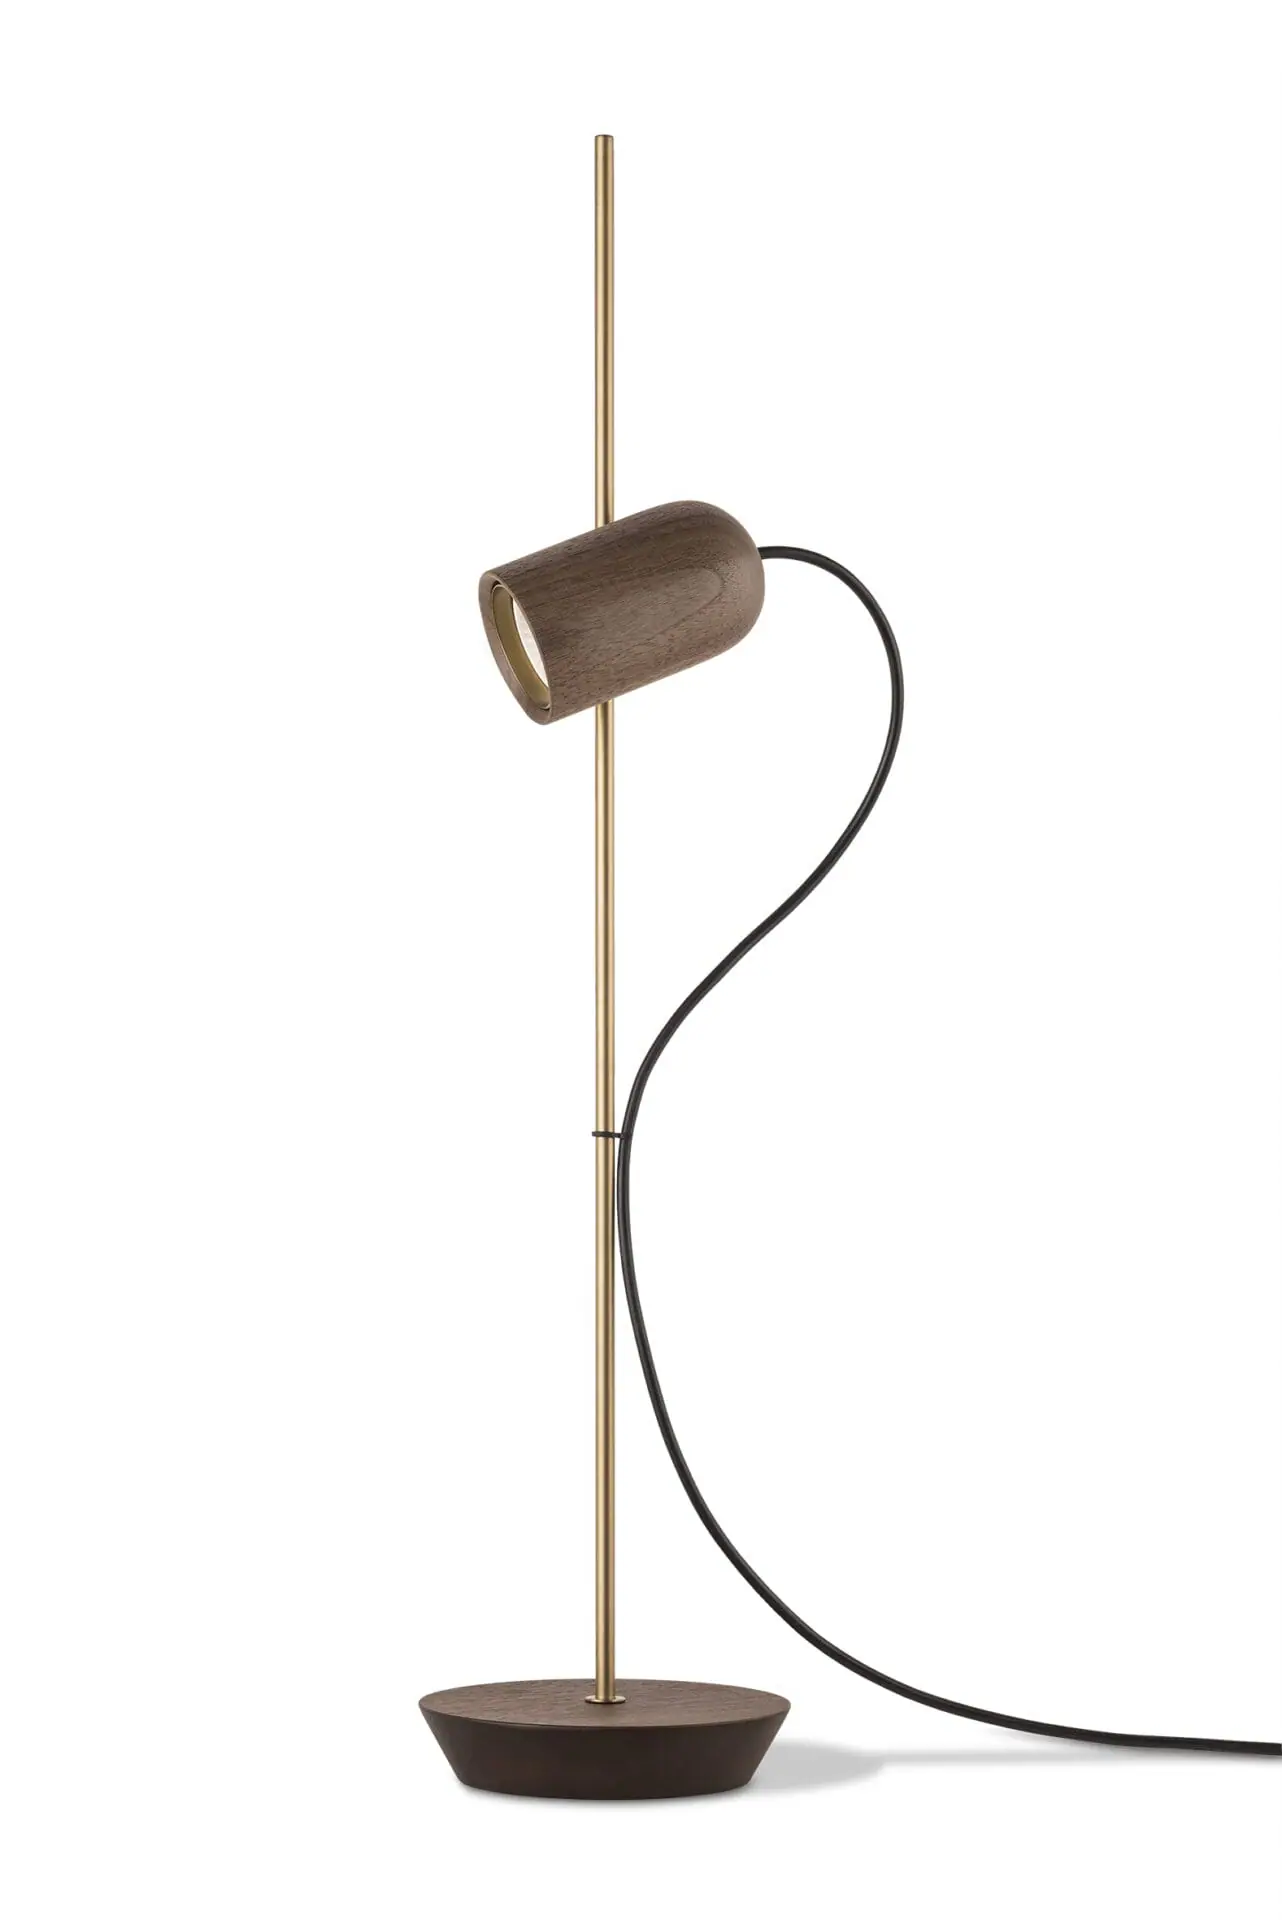 nomon-onfa-table-lamp02